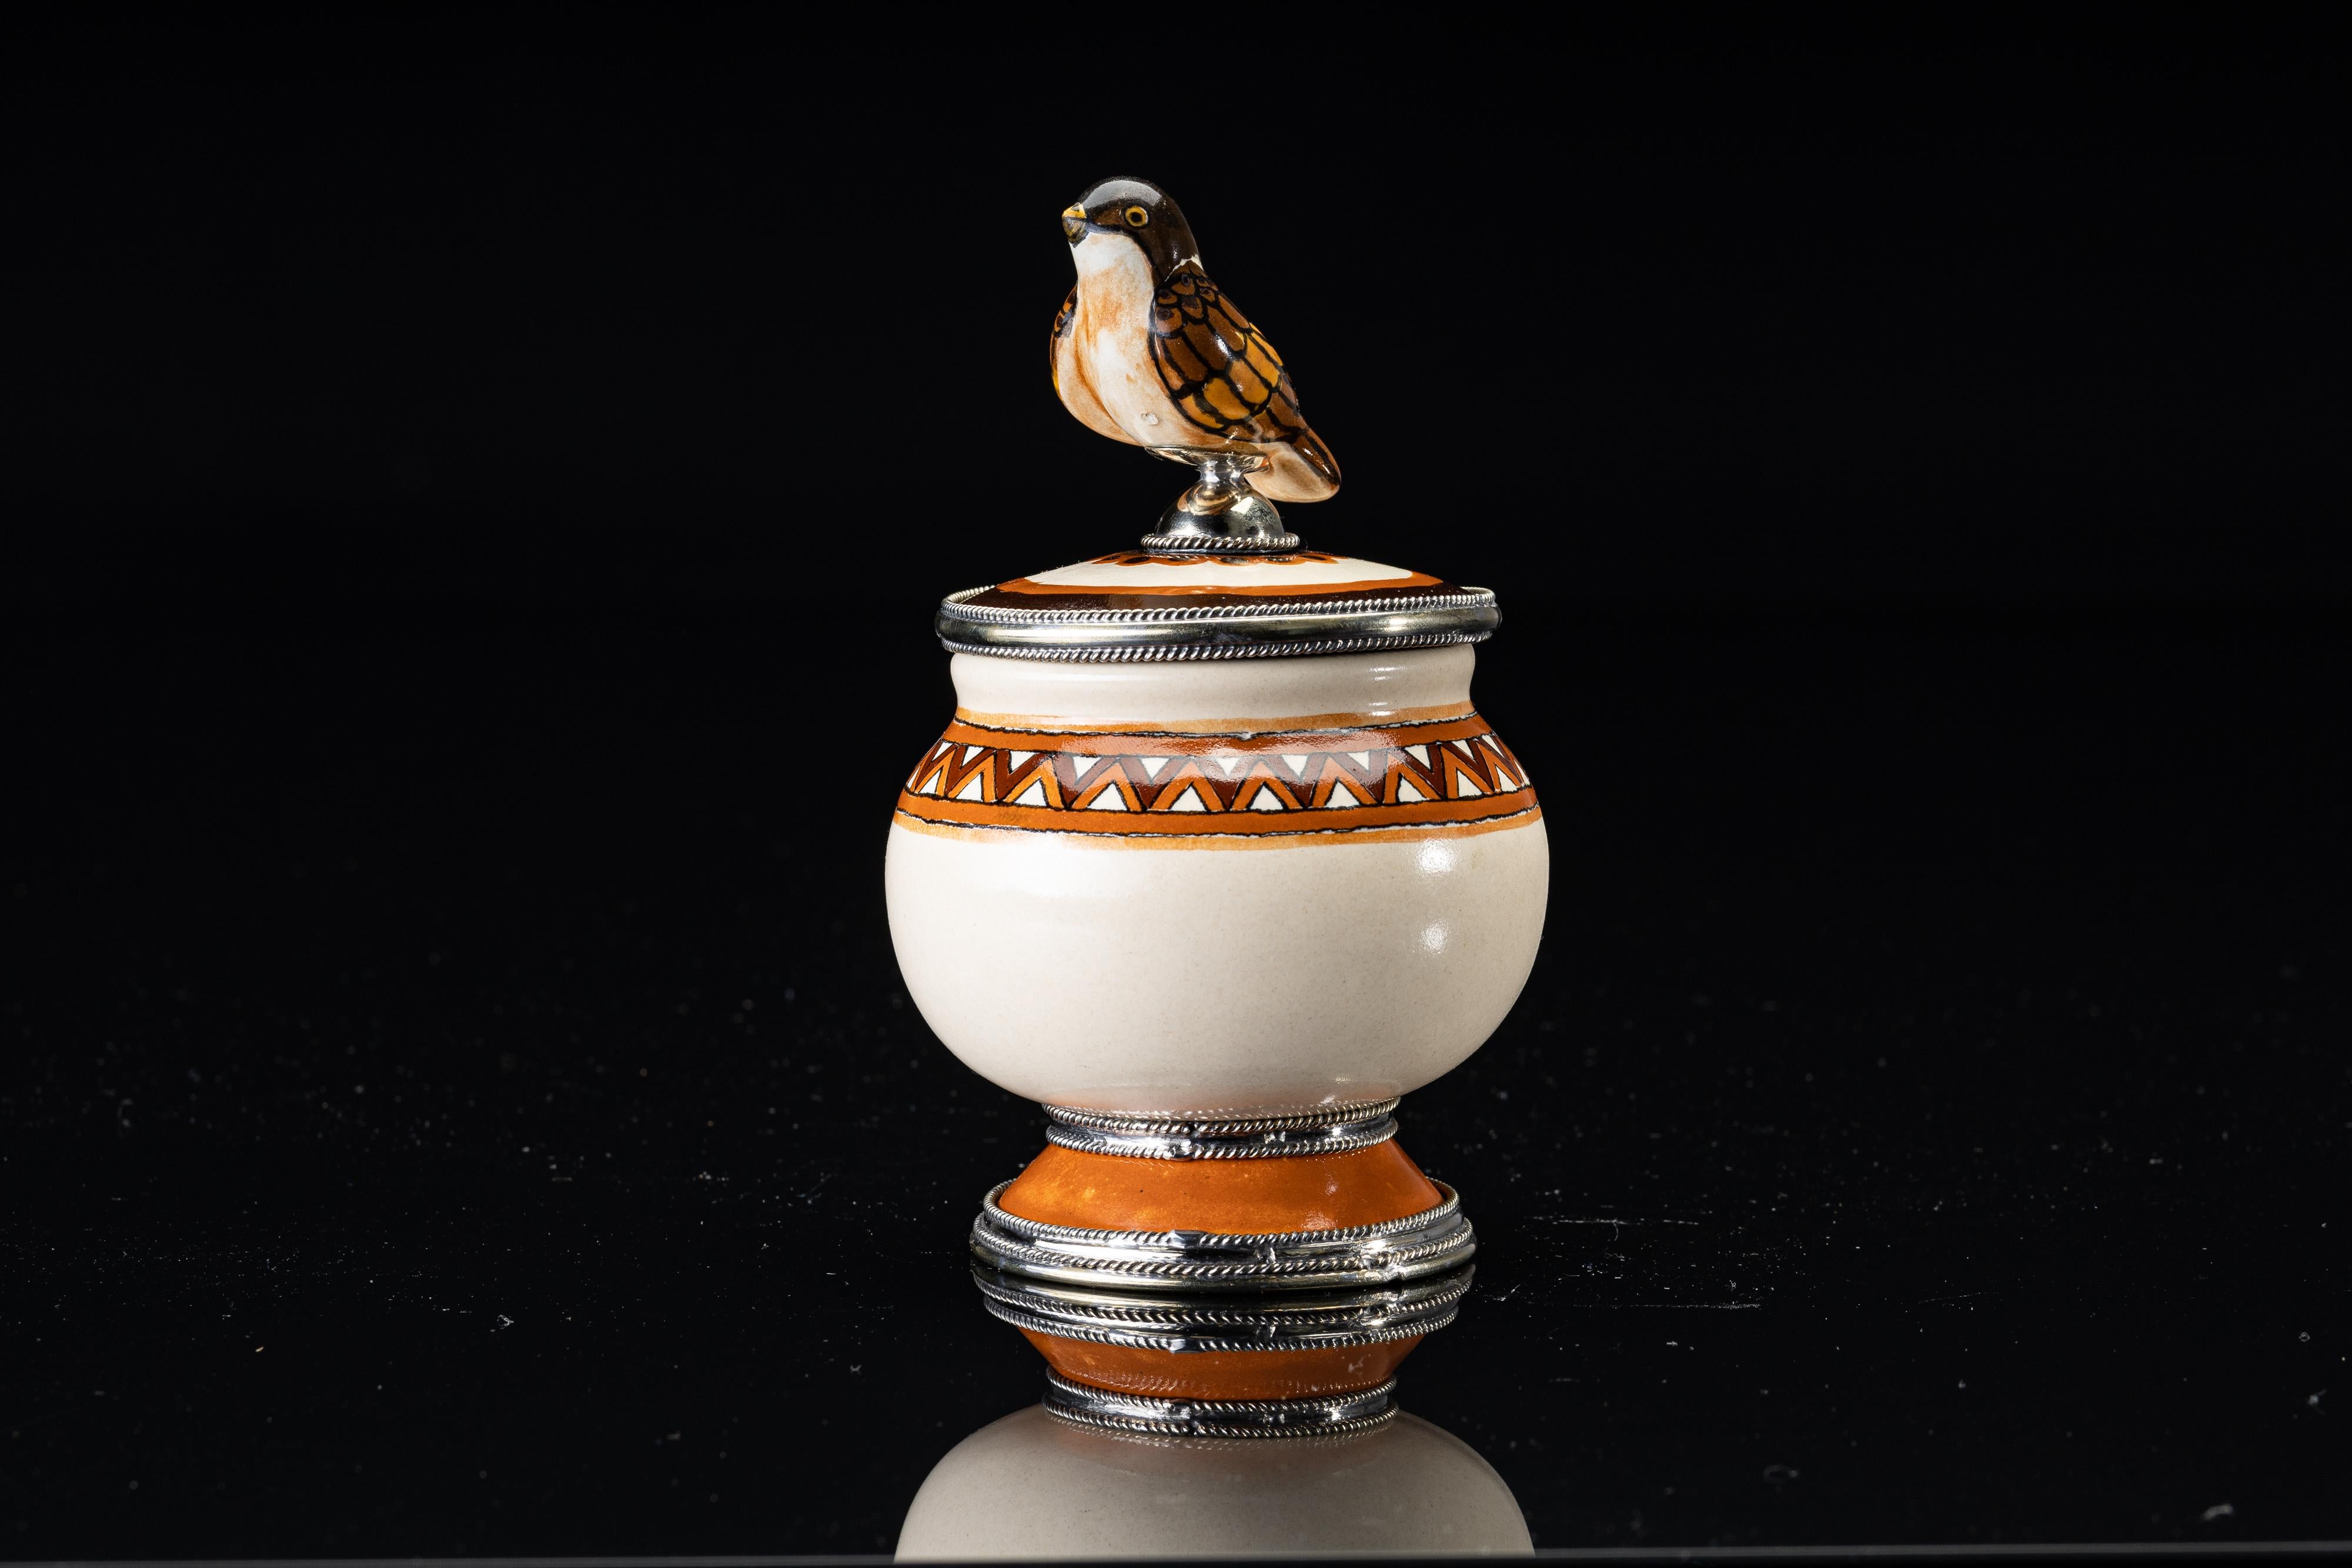 Mexican Ceramic and White Metal 'Alpaca' Compote Bird Centrepiece